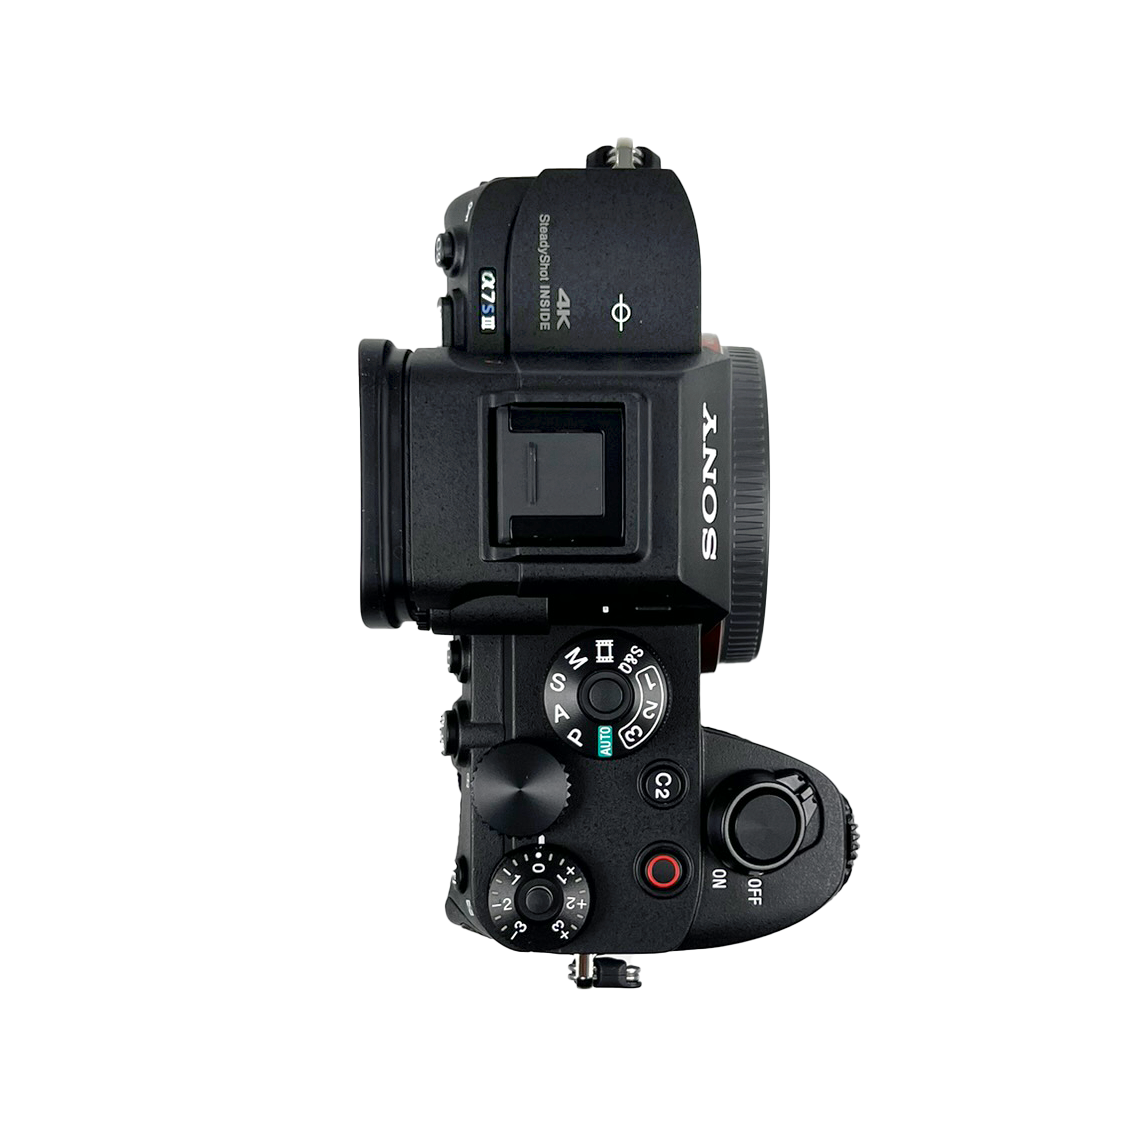 Sony Alpha 7S III Full-frame Mirrorless Camera (Body Only) Black